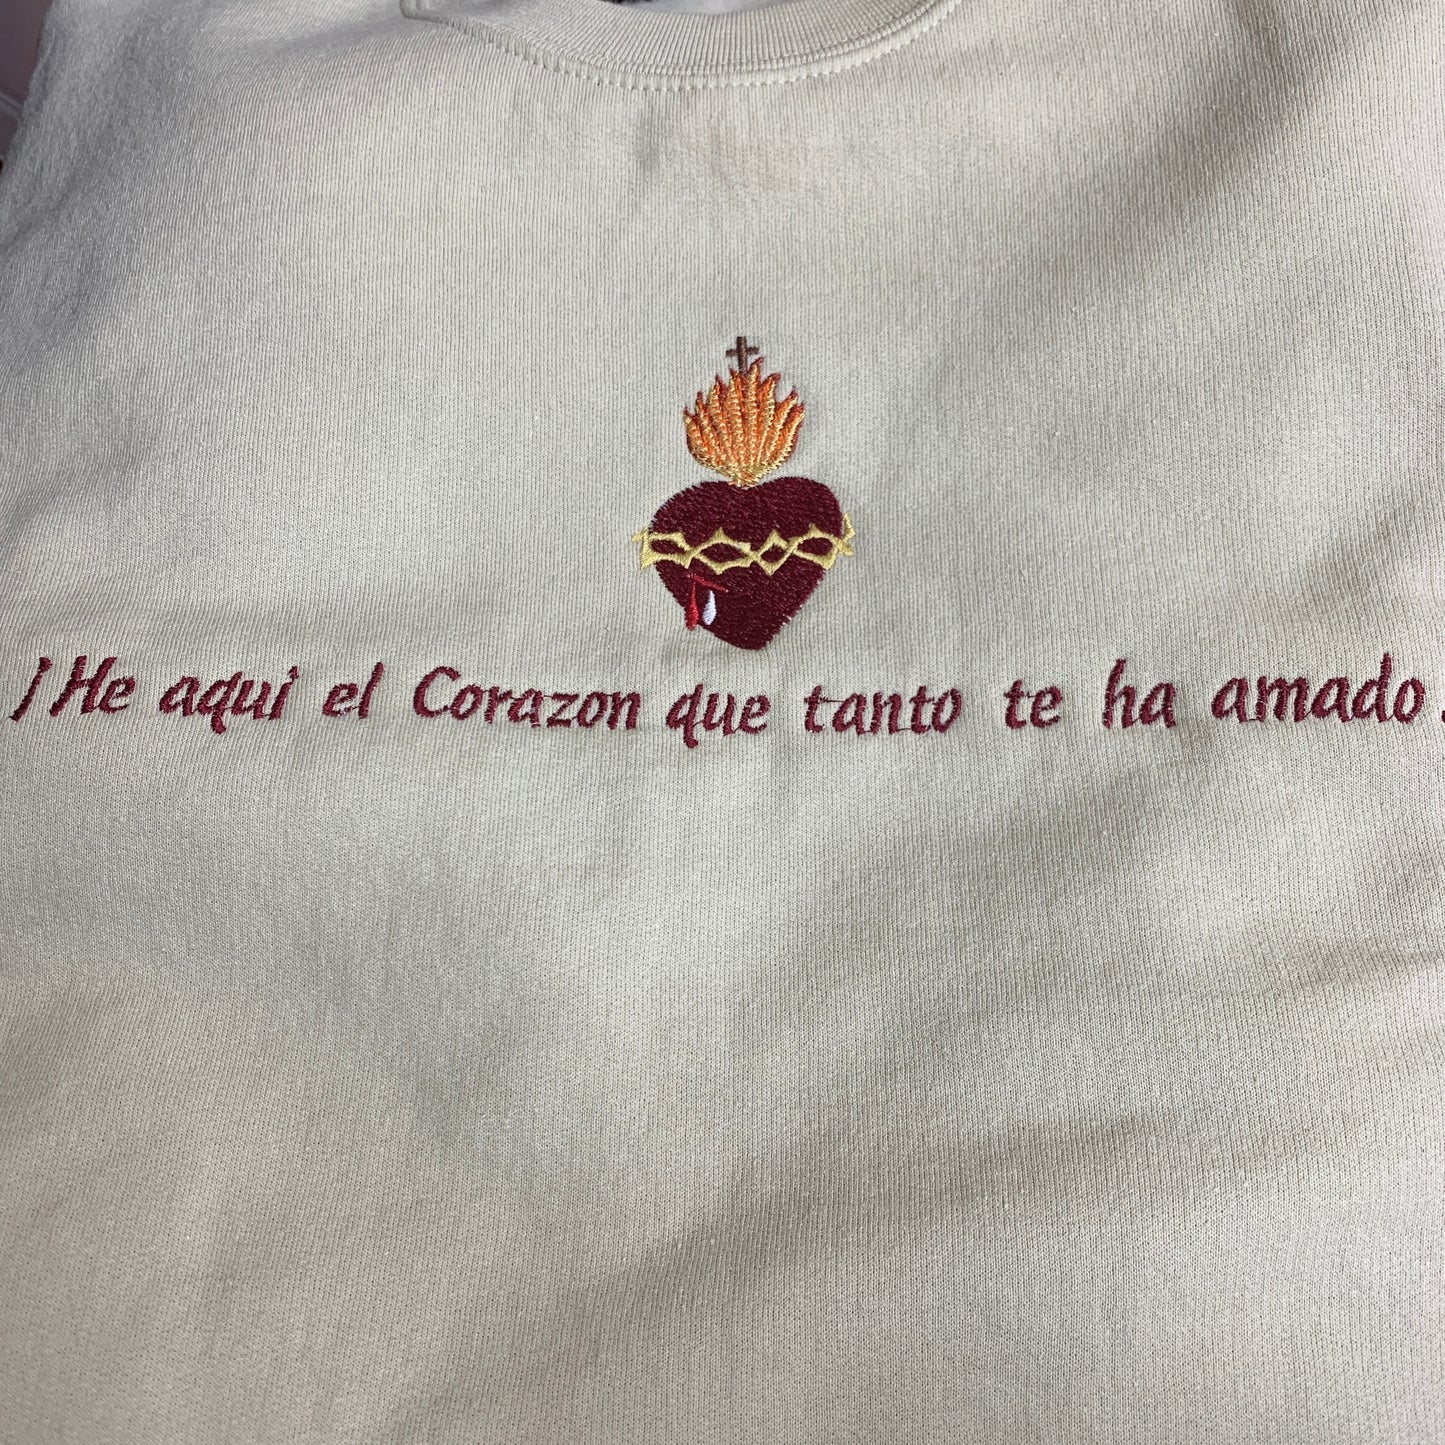 "He aqui el Corazon" Embroidered Sweater by SCTJM